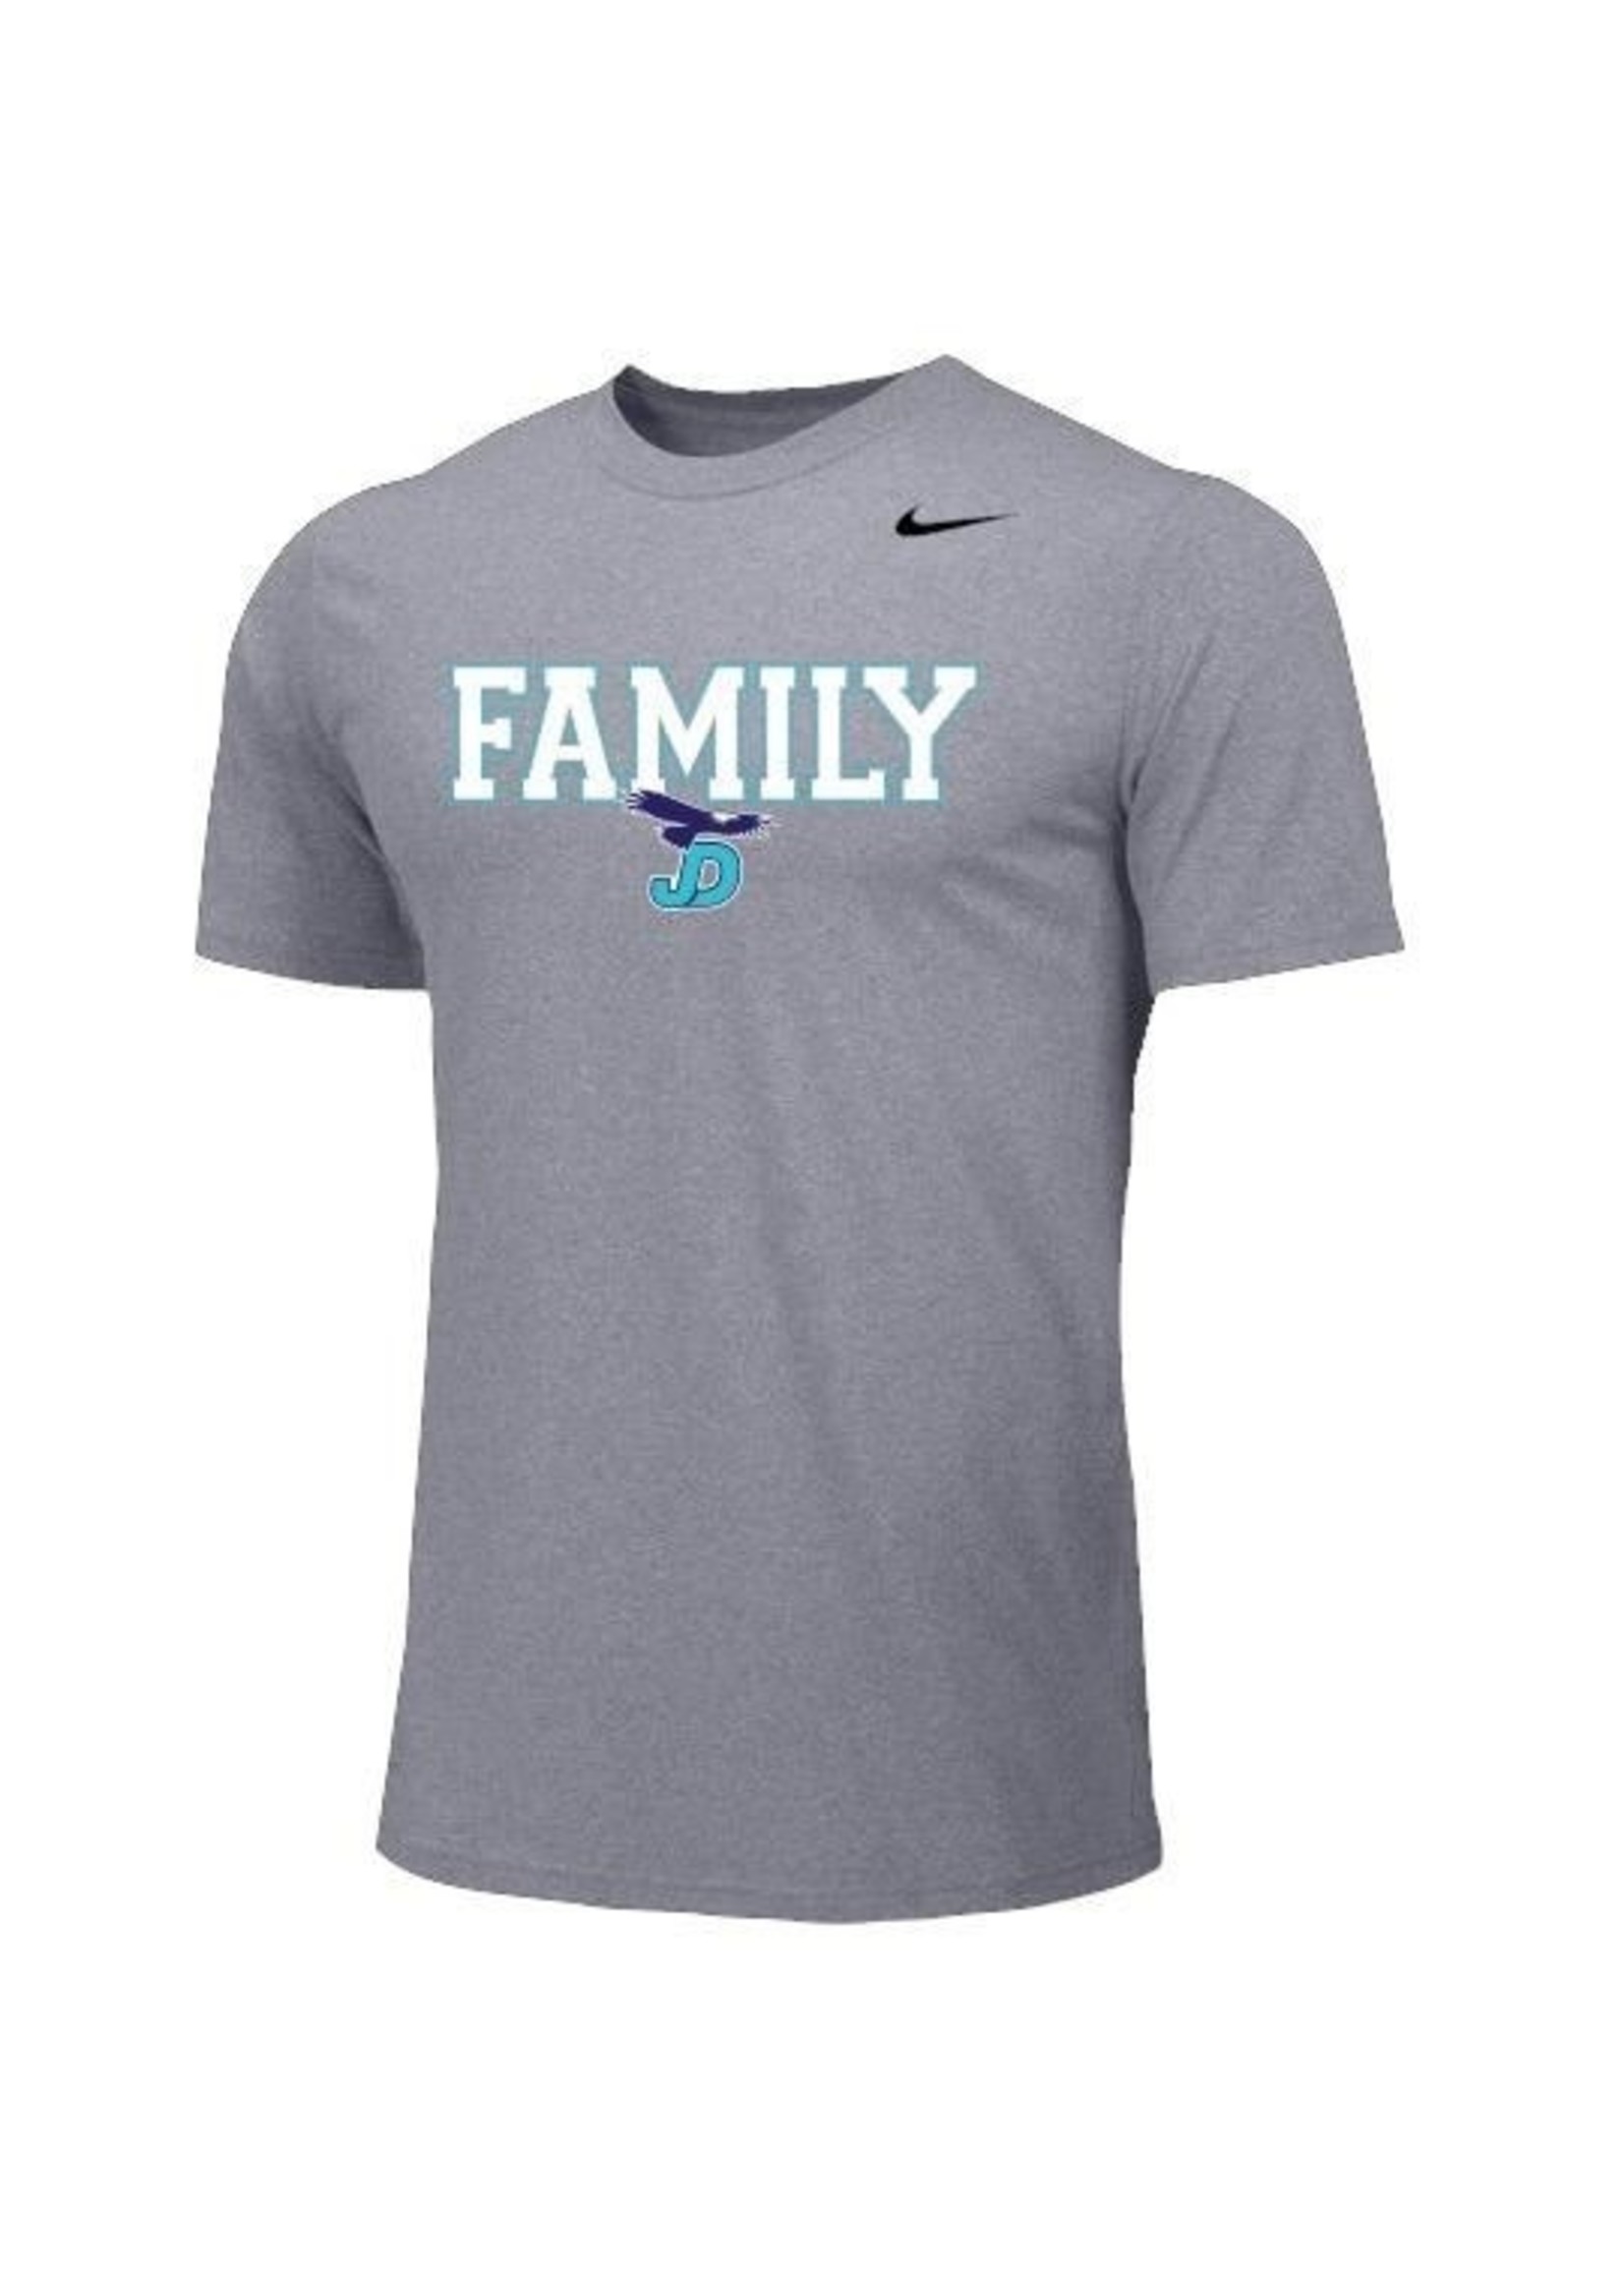 NON-UNIFORM JD Nike ‘Family’ Tee w/JD Logo CUSTOM - Add Sport